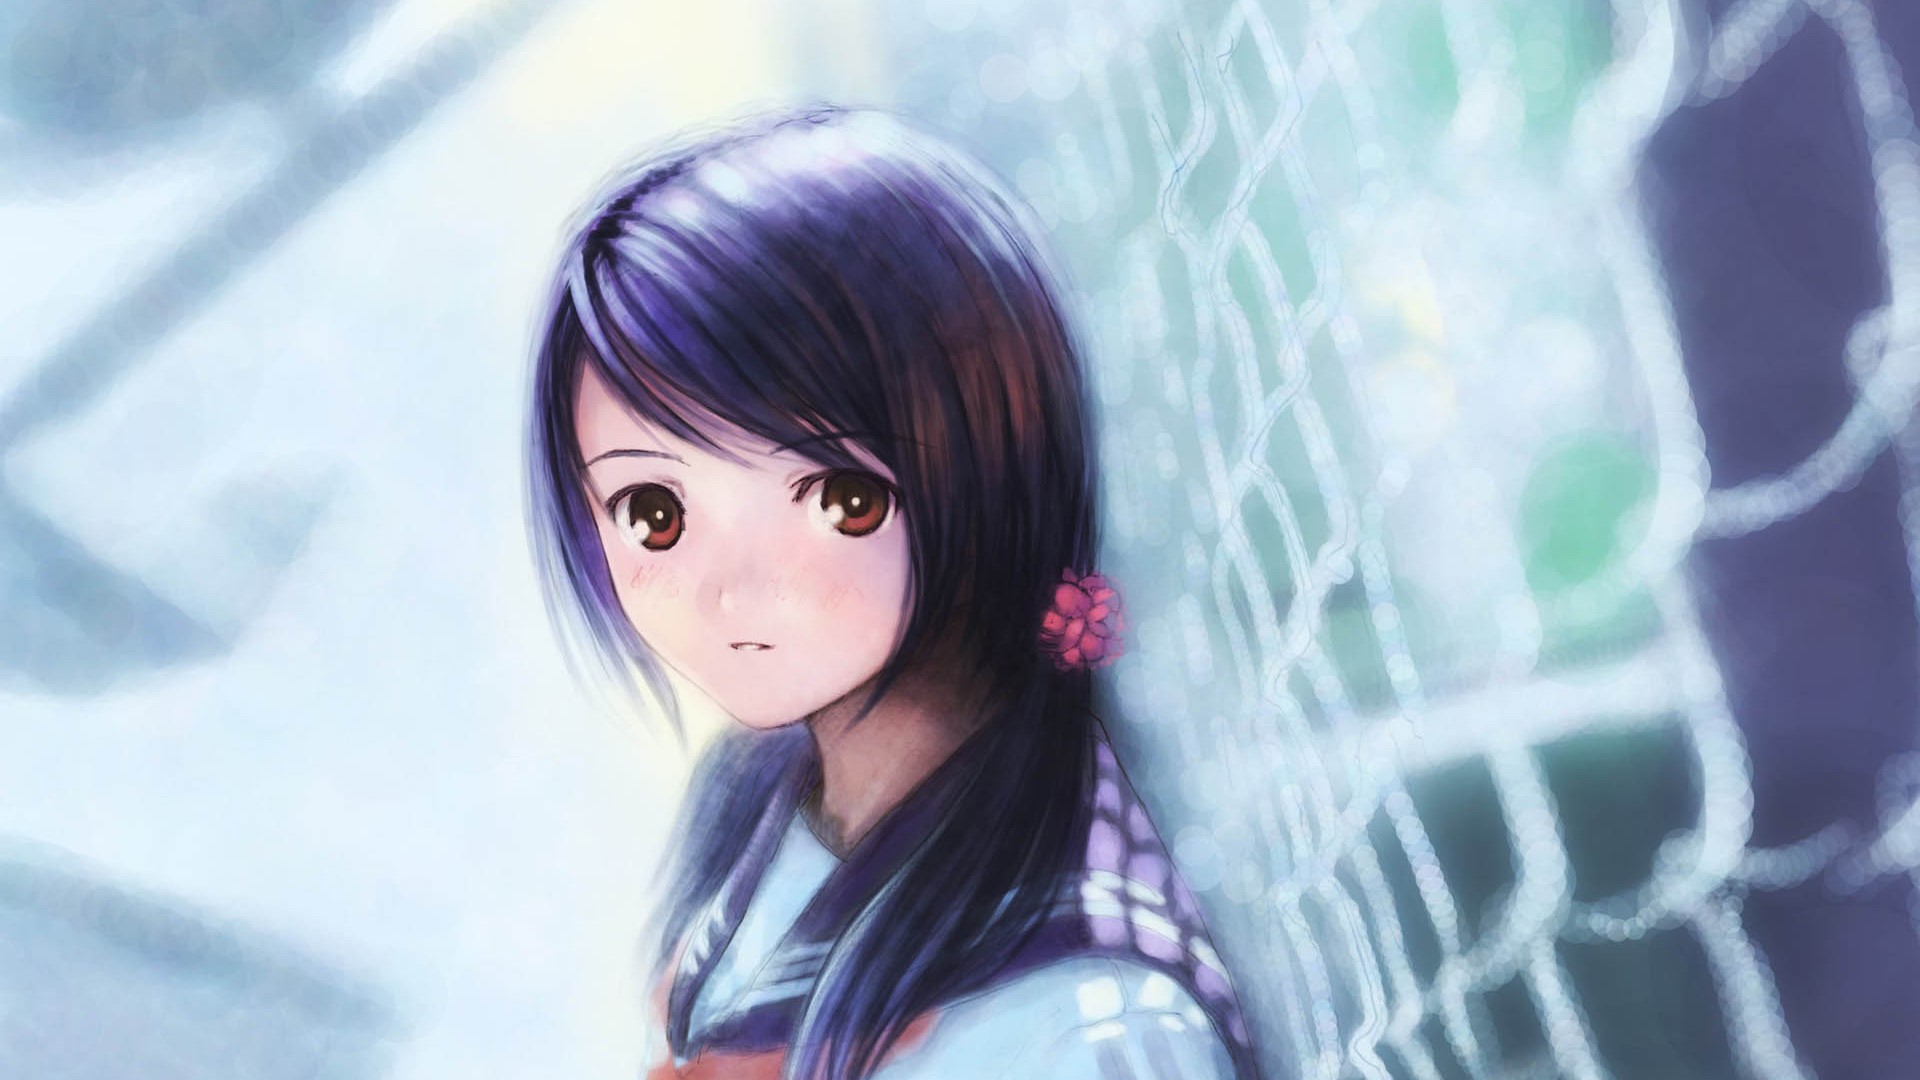 48+] Cute Anime Girls HD Wallpaper - WallpaperSafari